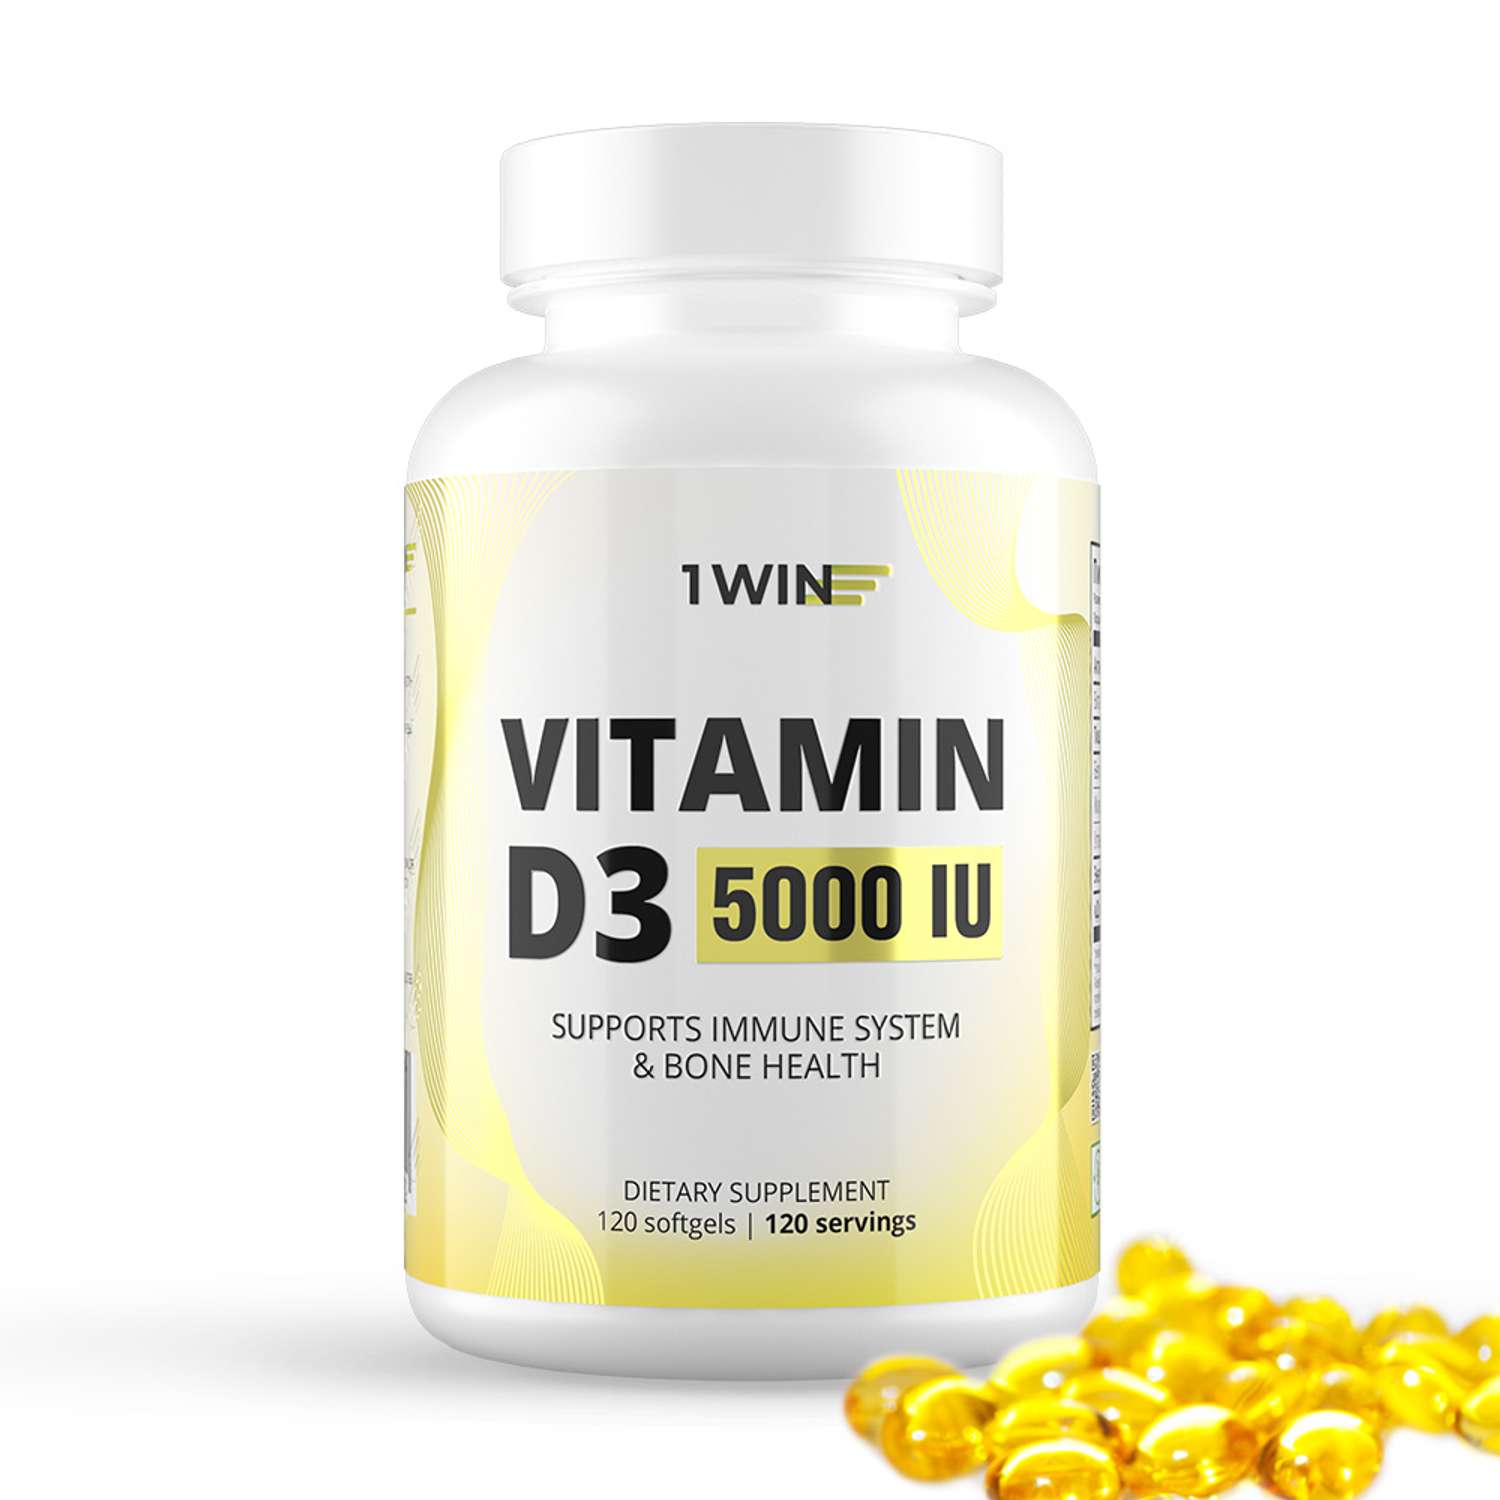 Витамин Д3 1WIN 5000 МЕ 120 капсул - фото 1